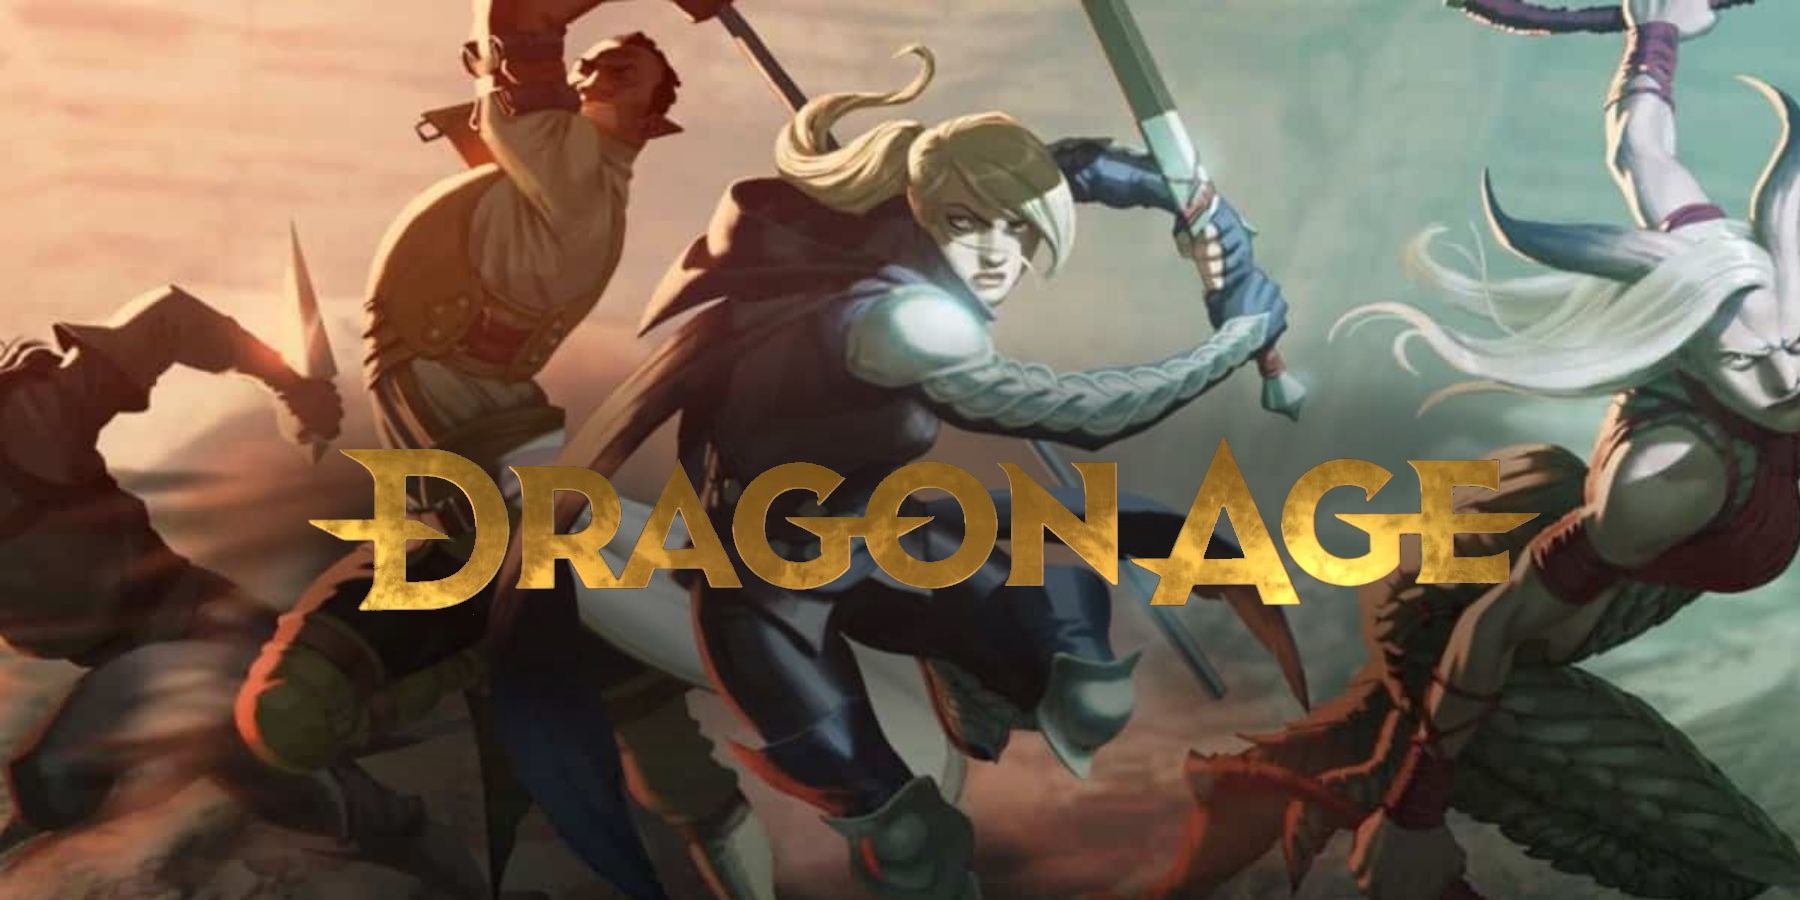 Top Ten Dragon Age Companions (According to Reddit) – 'E' For Everyone